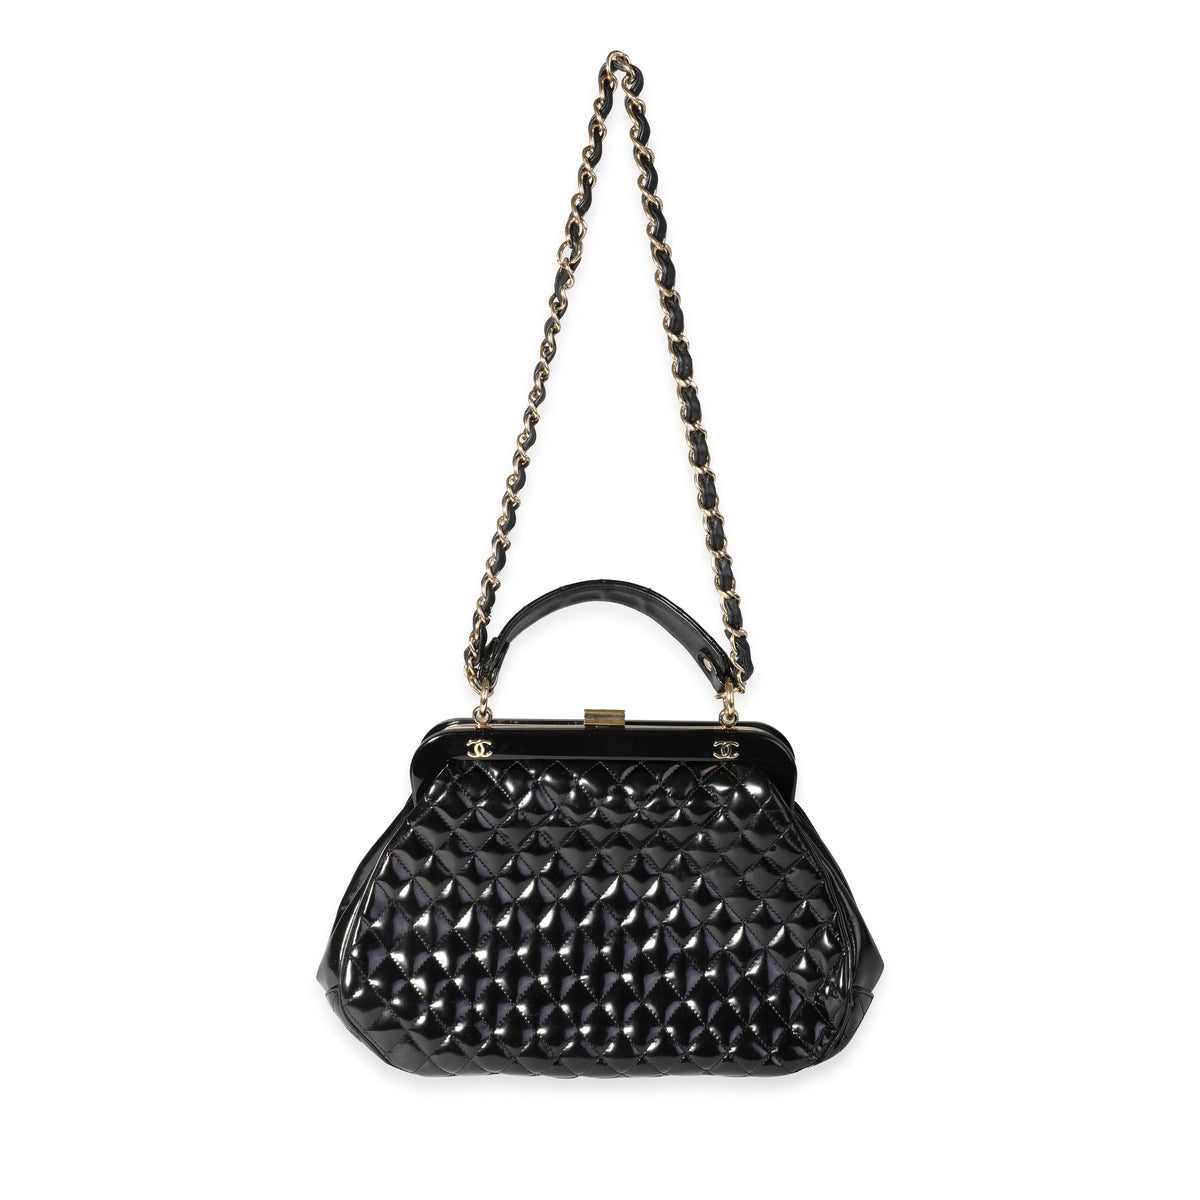 Chanel Black Glazed Calfskin Quilted Mademoiselle Frame Small Bag